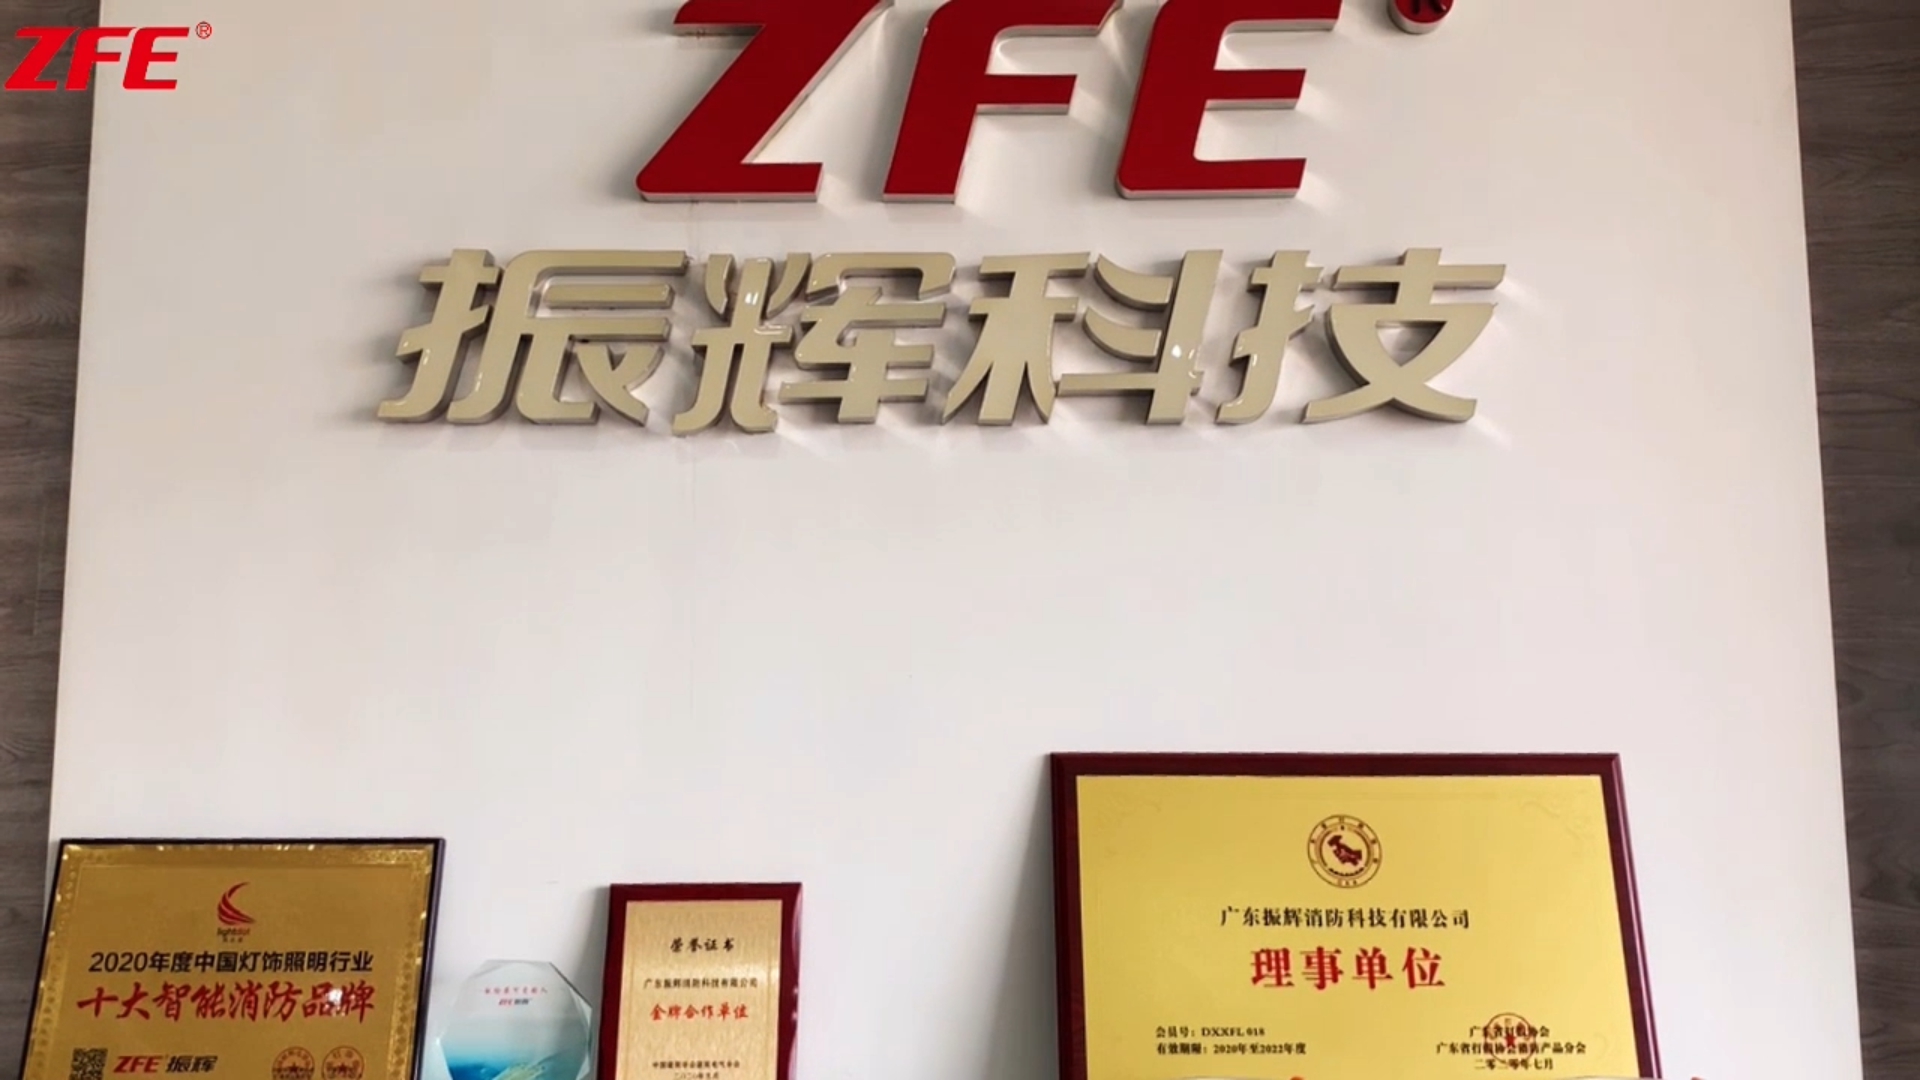 Bedryfsverenigings kom besoek Guangdong Zhenhui Fire Technology Co., Ltd.